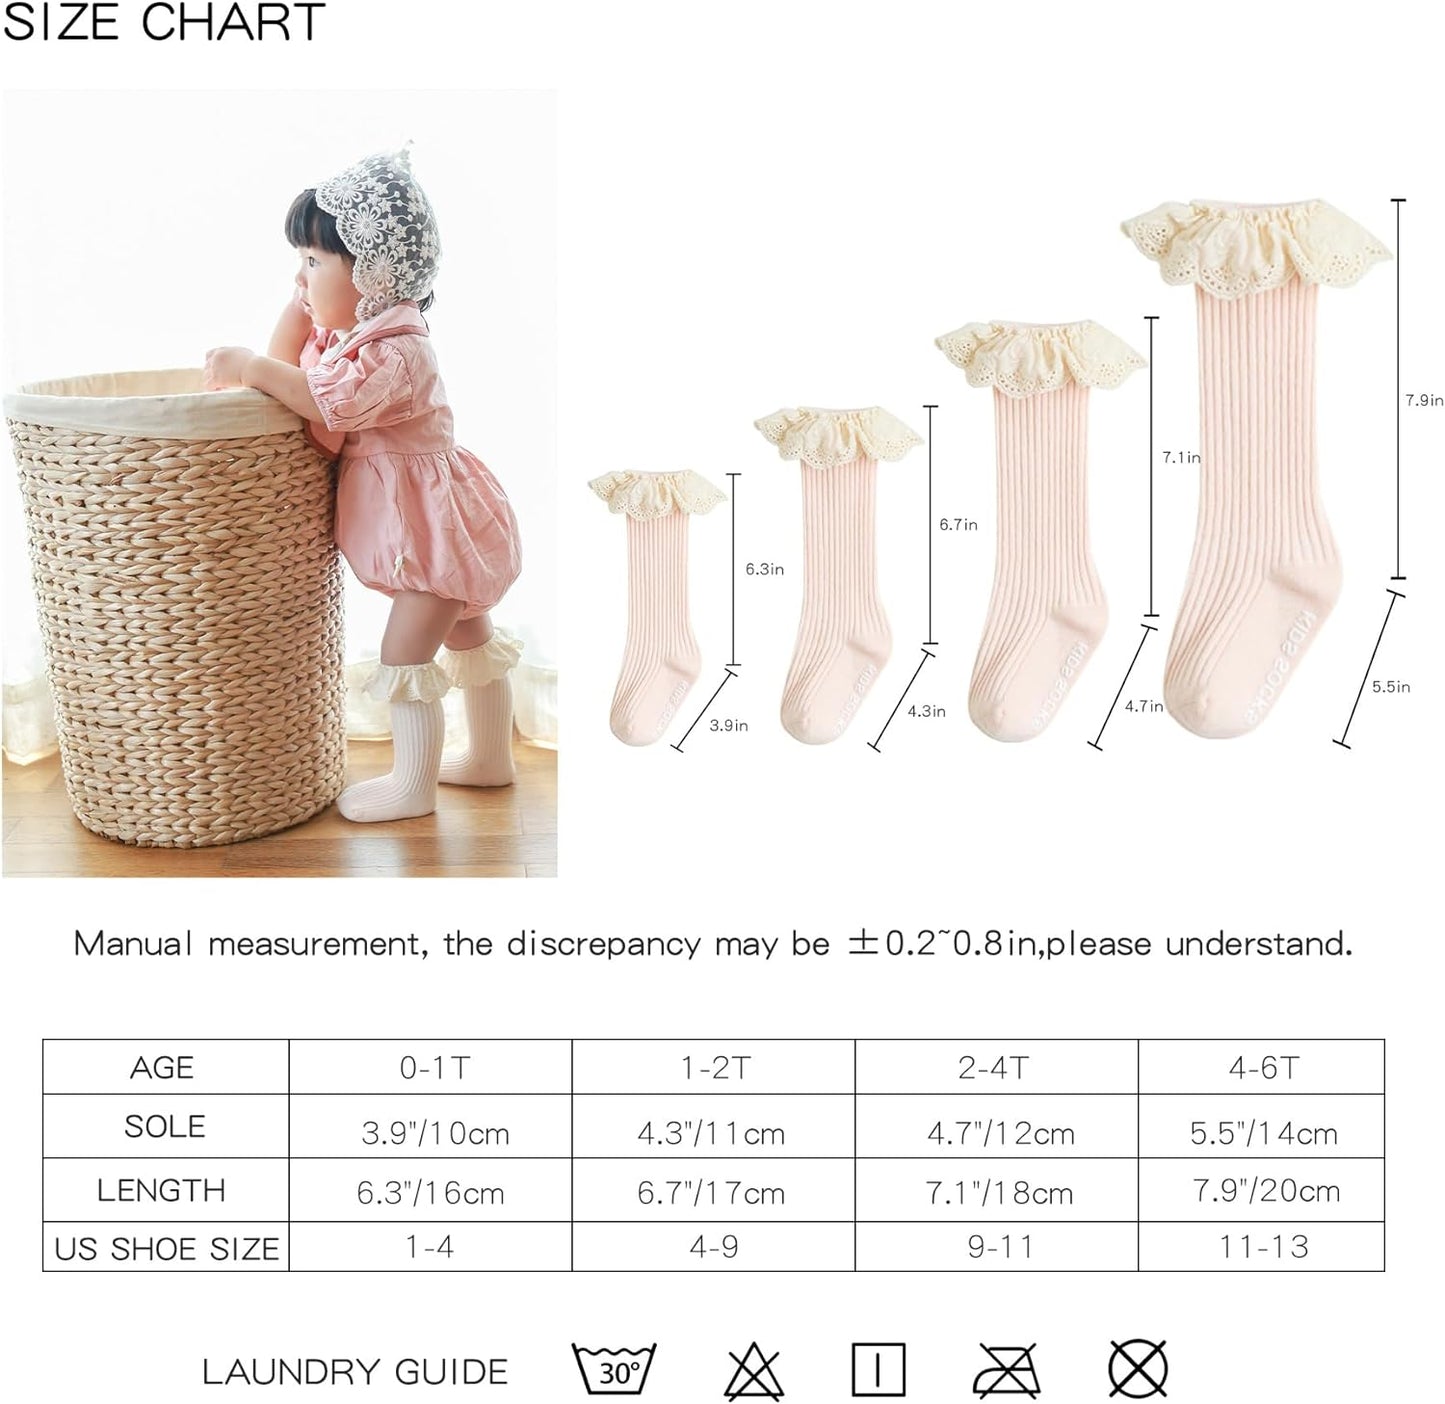 Baby Toddler Ruffle Lace Knee Girls Uniform Long Stockings Infants Cotton Cute Princess Frilly High Dress Socks